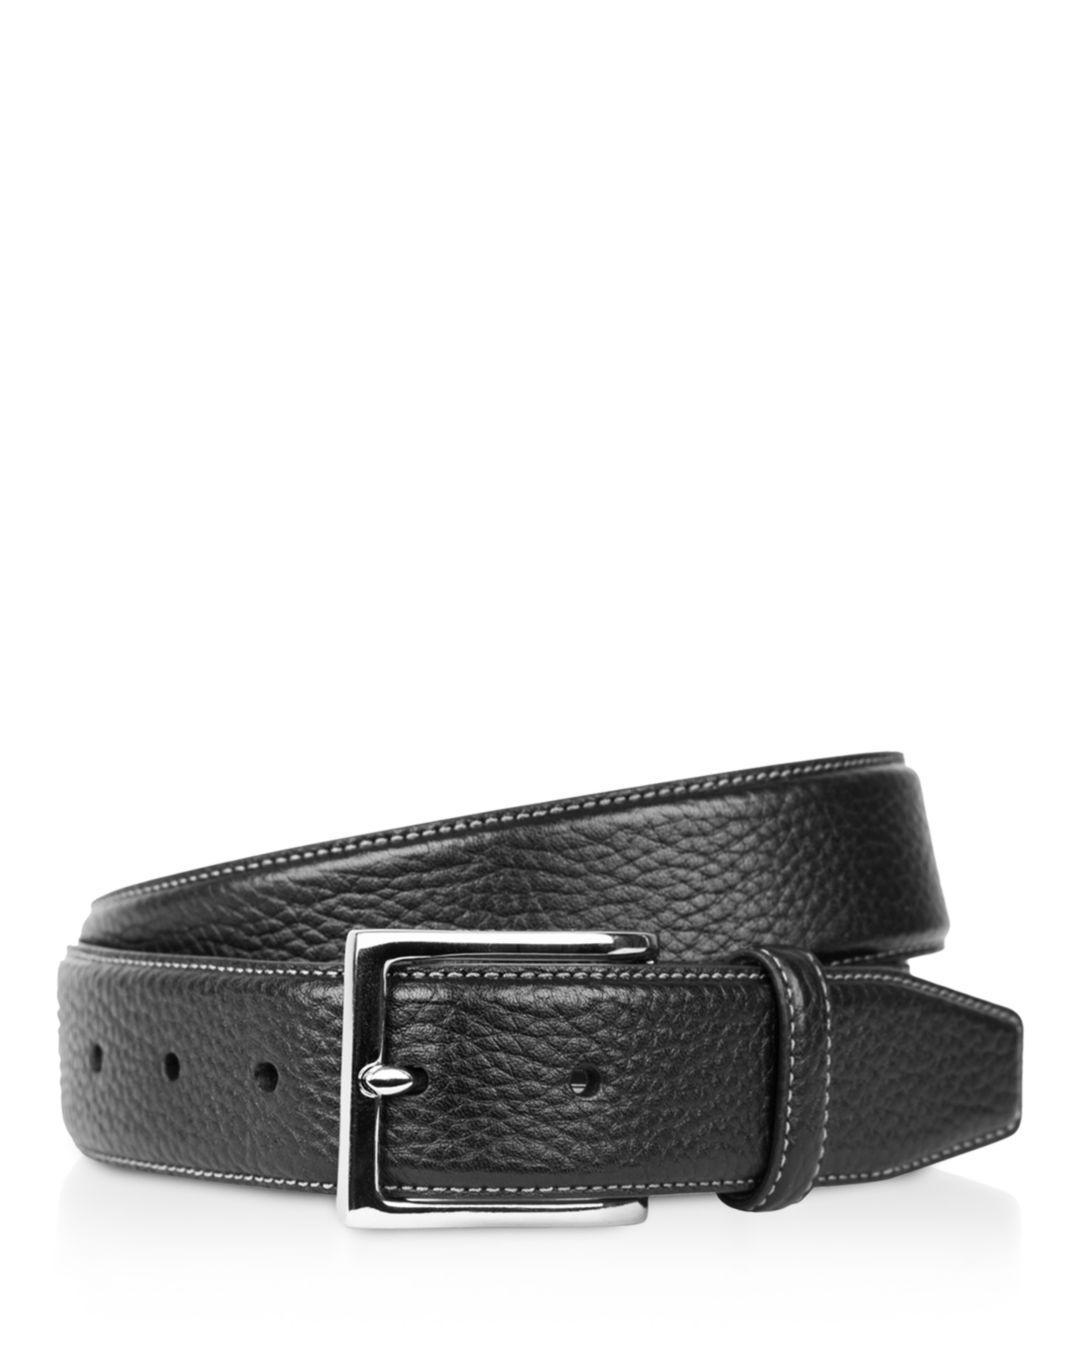 Lyst - Cole Haan Pebble Leather Belt in Black for Men